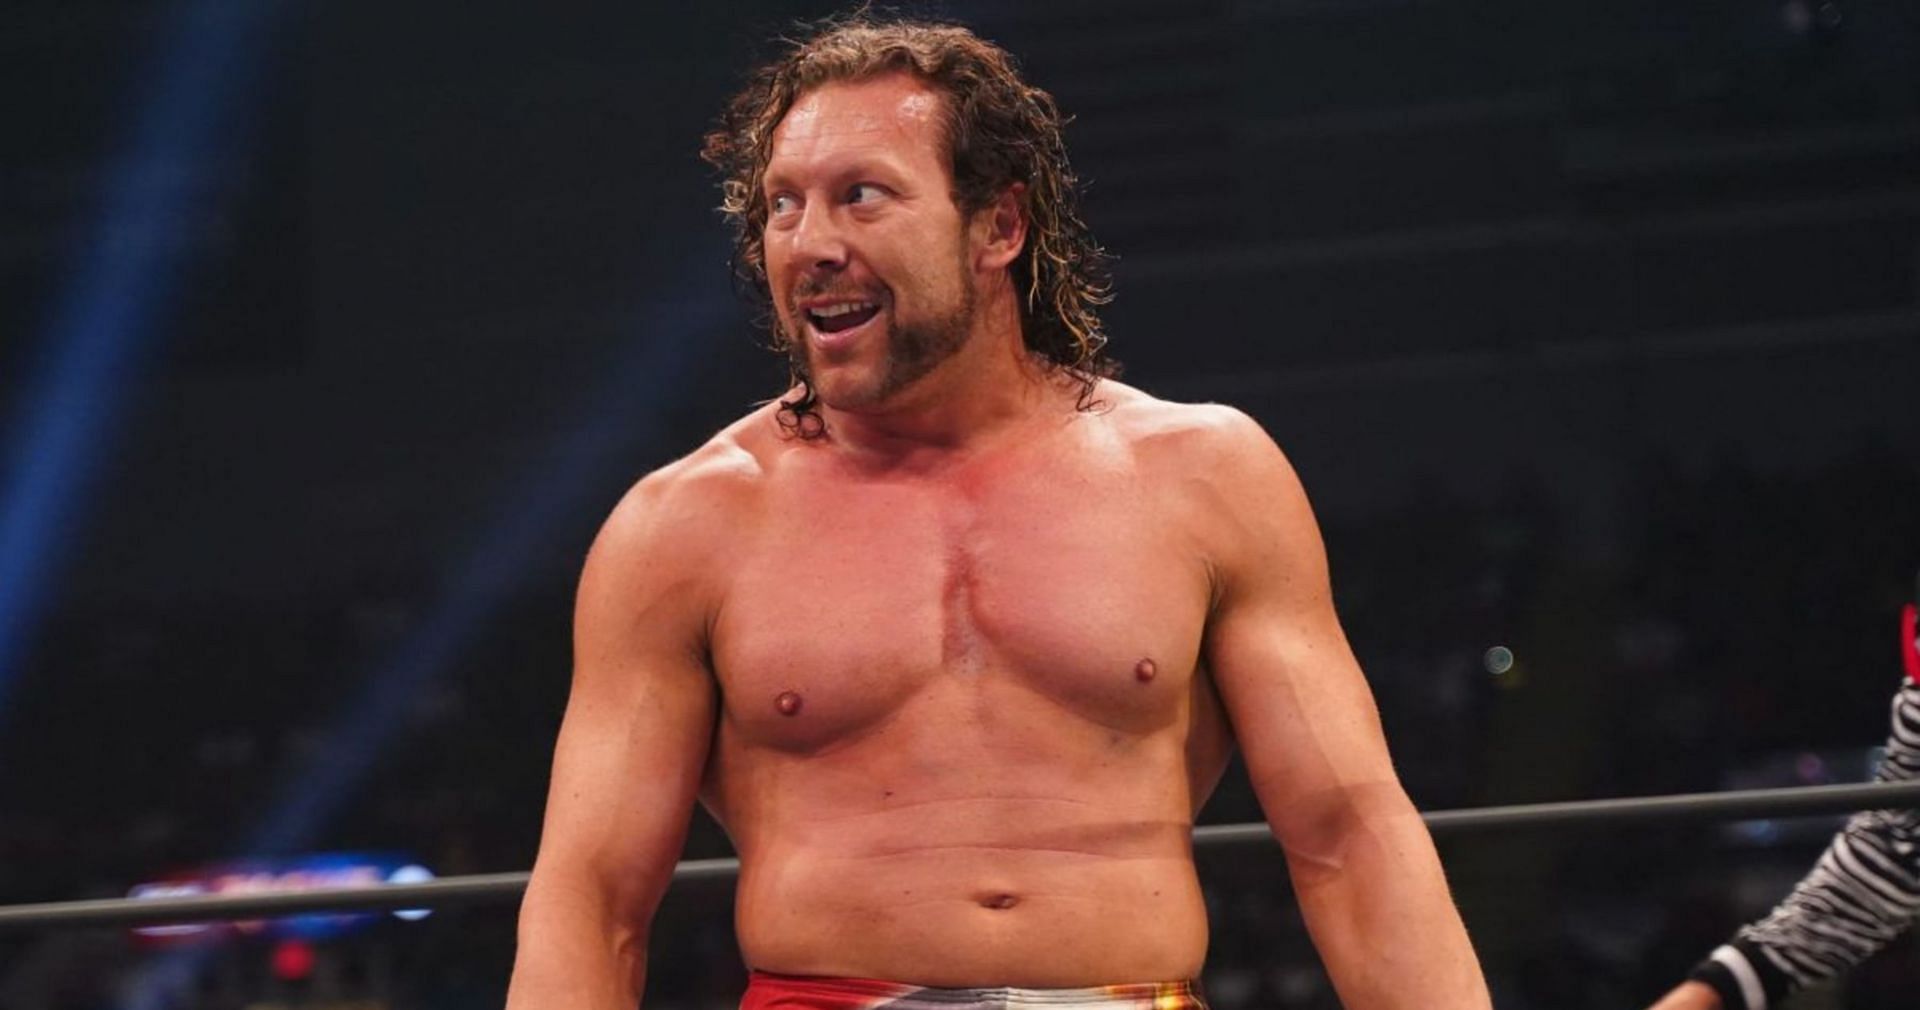 Kenny Omega will return to NJPW on January 4th